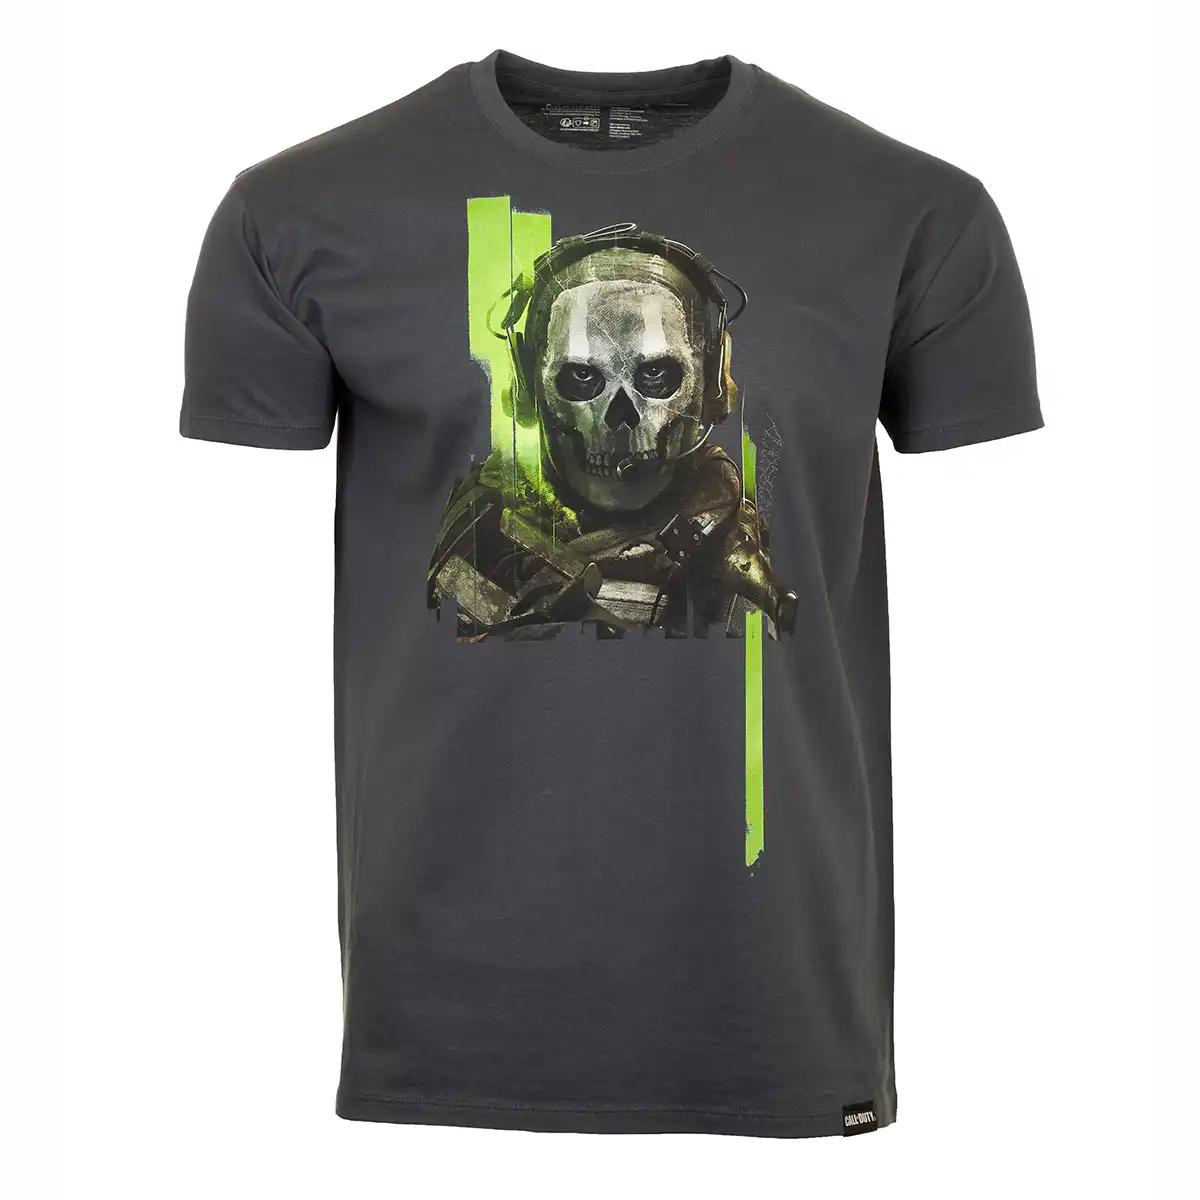 Call of Duty T-Shirt "Simon Riley" Dark Grey L